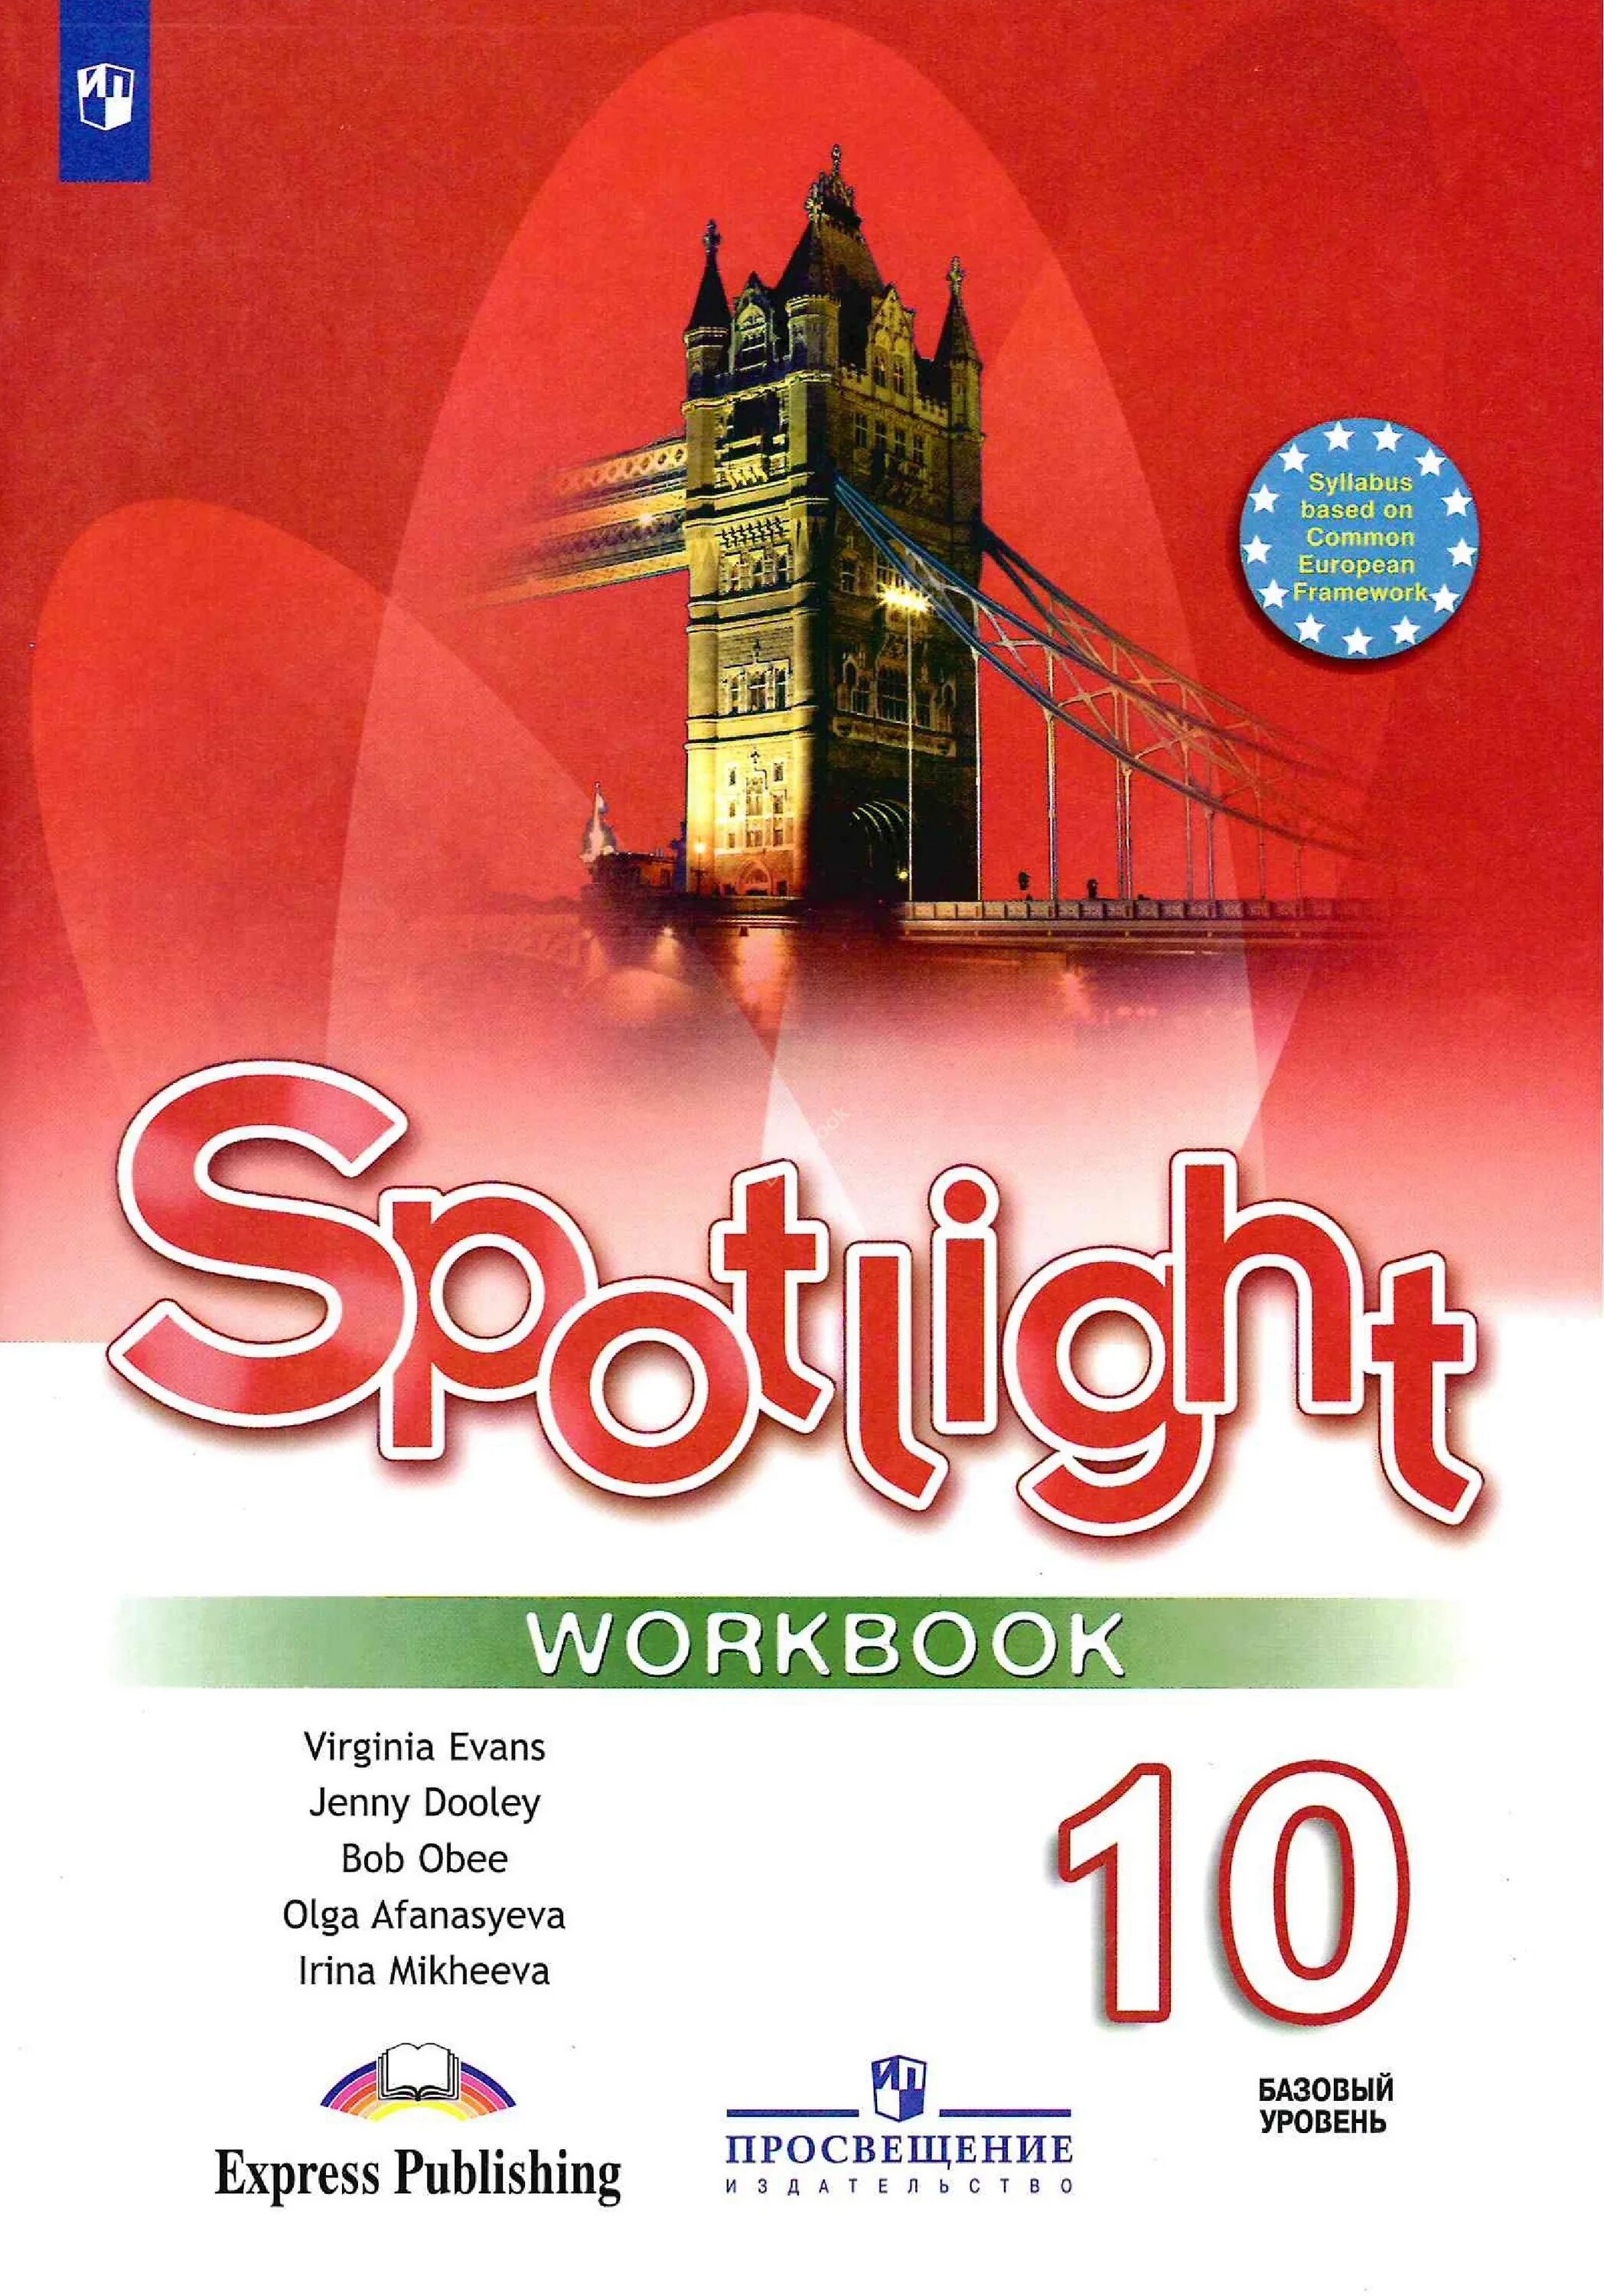 Workbook Spotlight 5 класс ваулина. Spotlight 5 Workbook английский язык Эванс. Англ 5 класс рабочая тетрадь Spotlight. Тетради для английского языка 5 класс спотлайт.